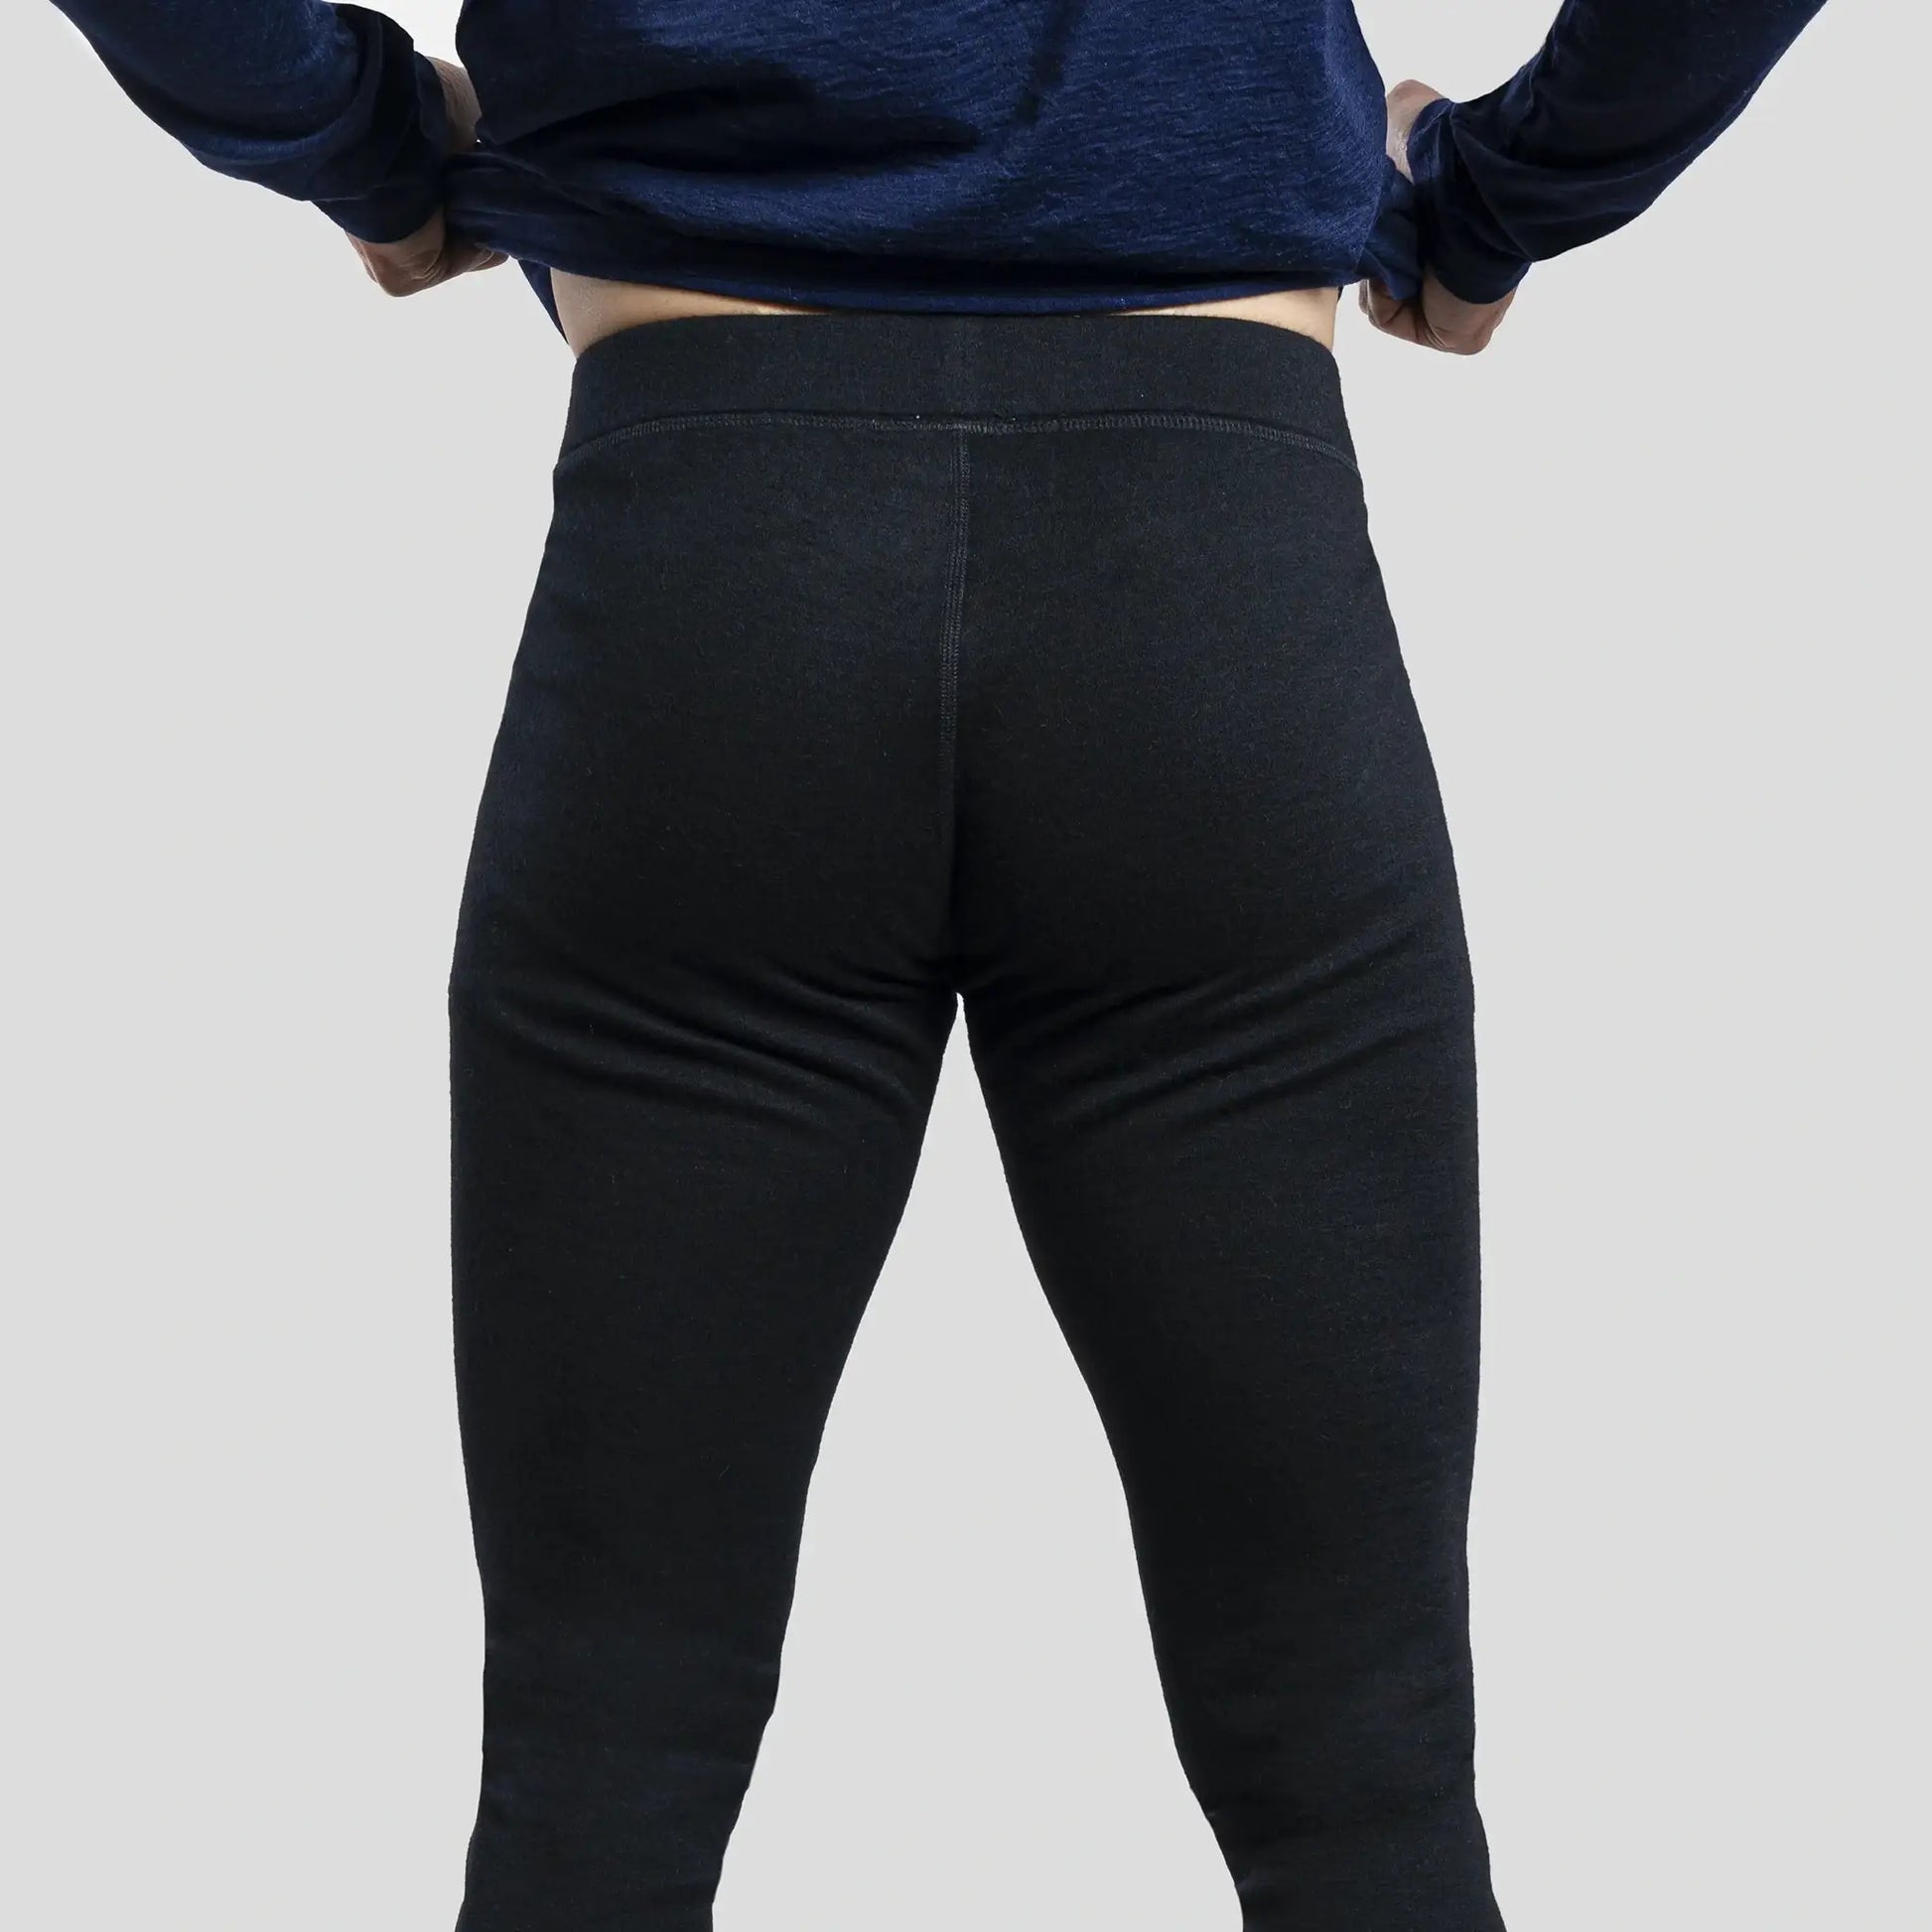 mens low moisture absorption leggings midweight color black